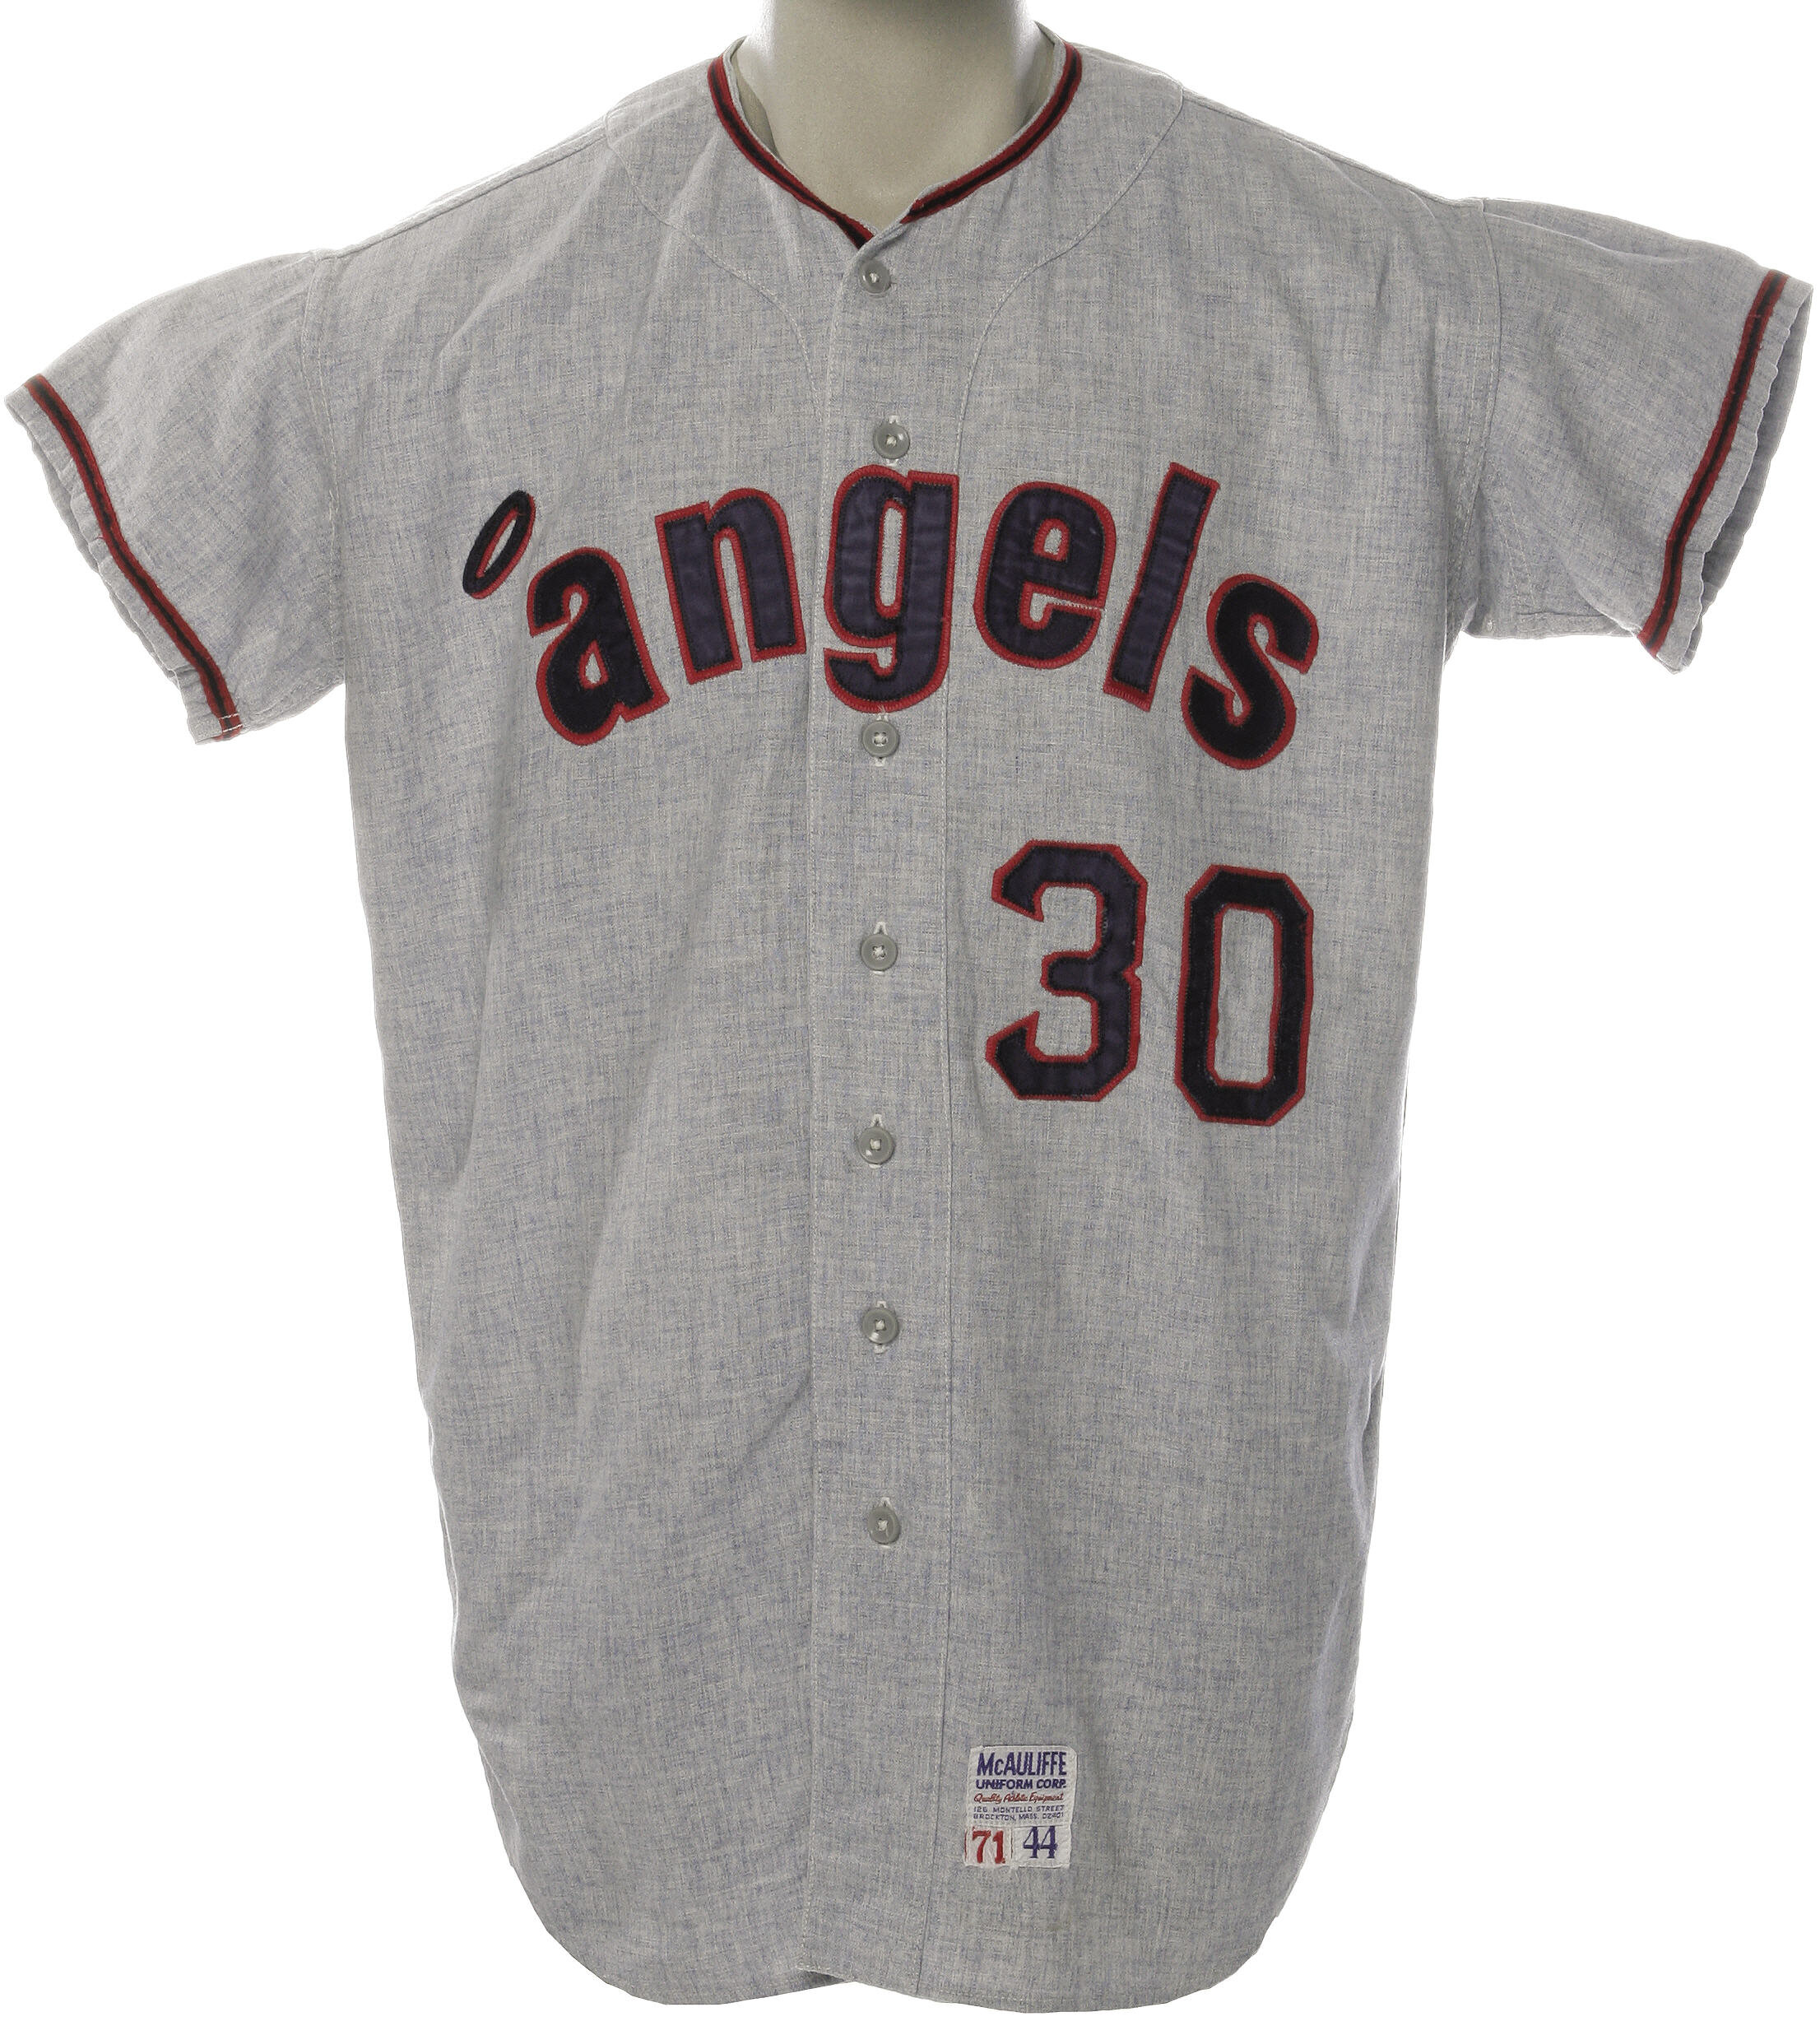 Vintage California Angels poster, c. 1971 : r/angelsbaseball